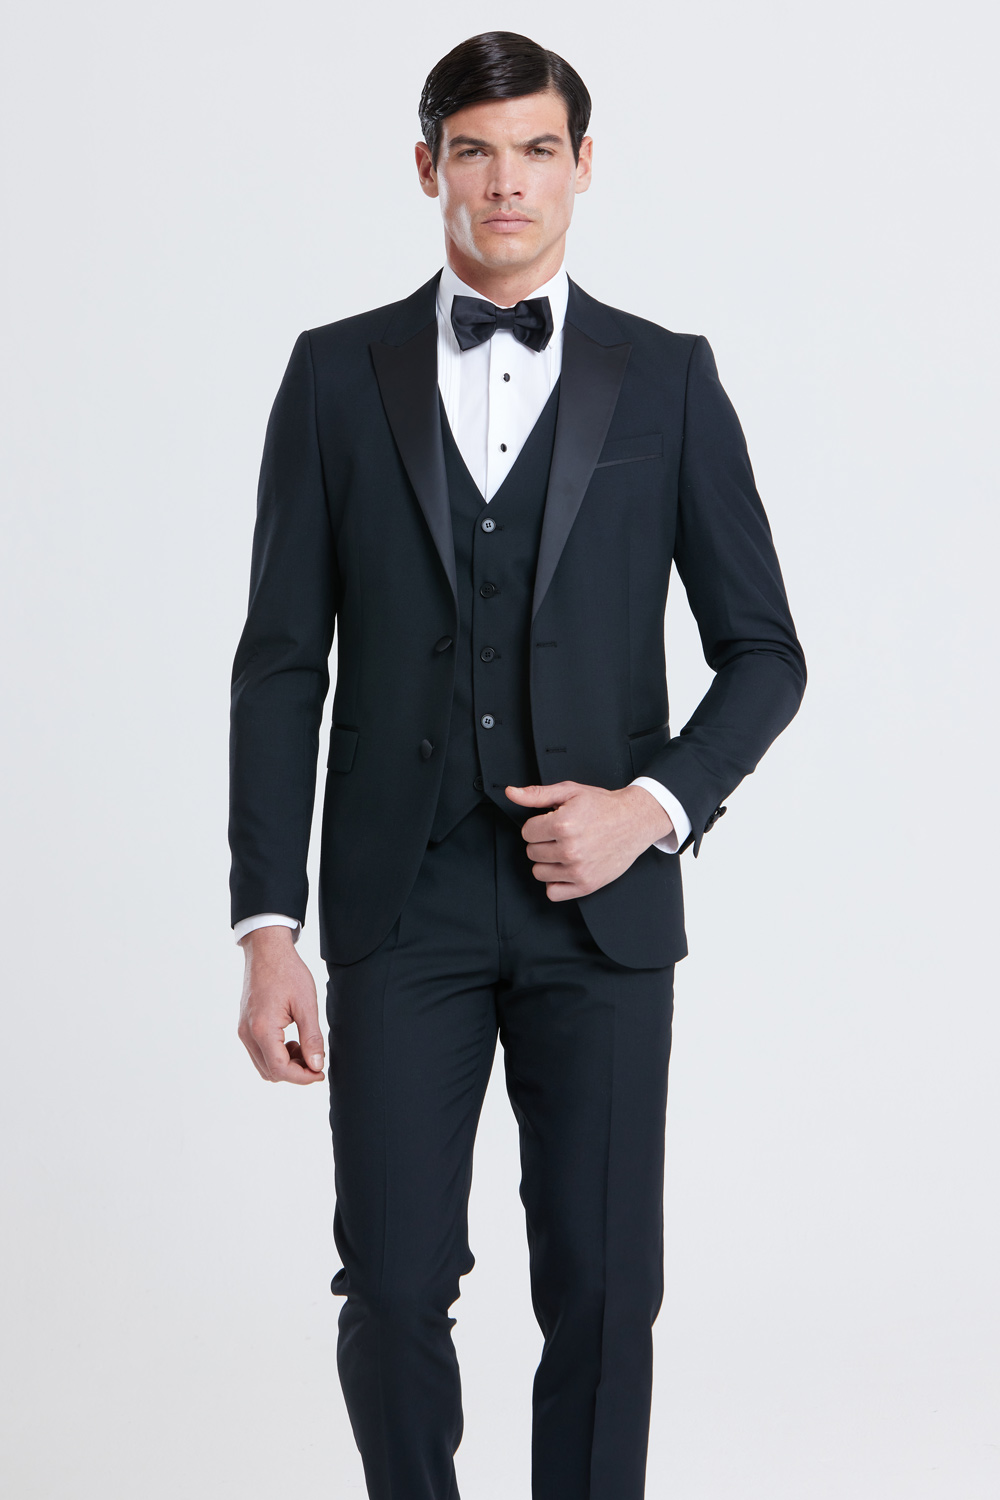 Peak Lapel Black Tuxedo - Tom Murphy's Formal and Menswear